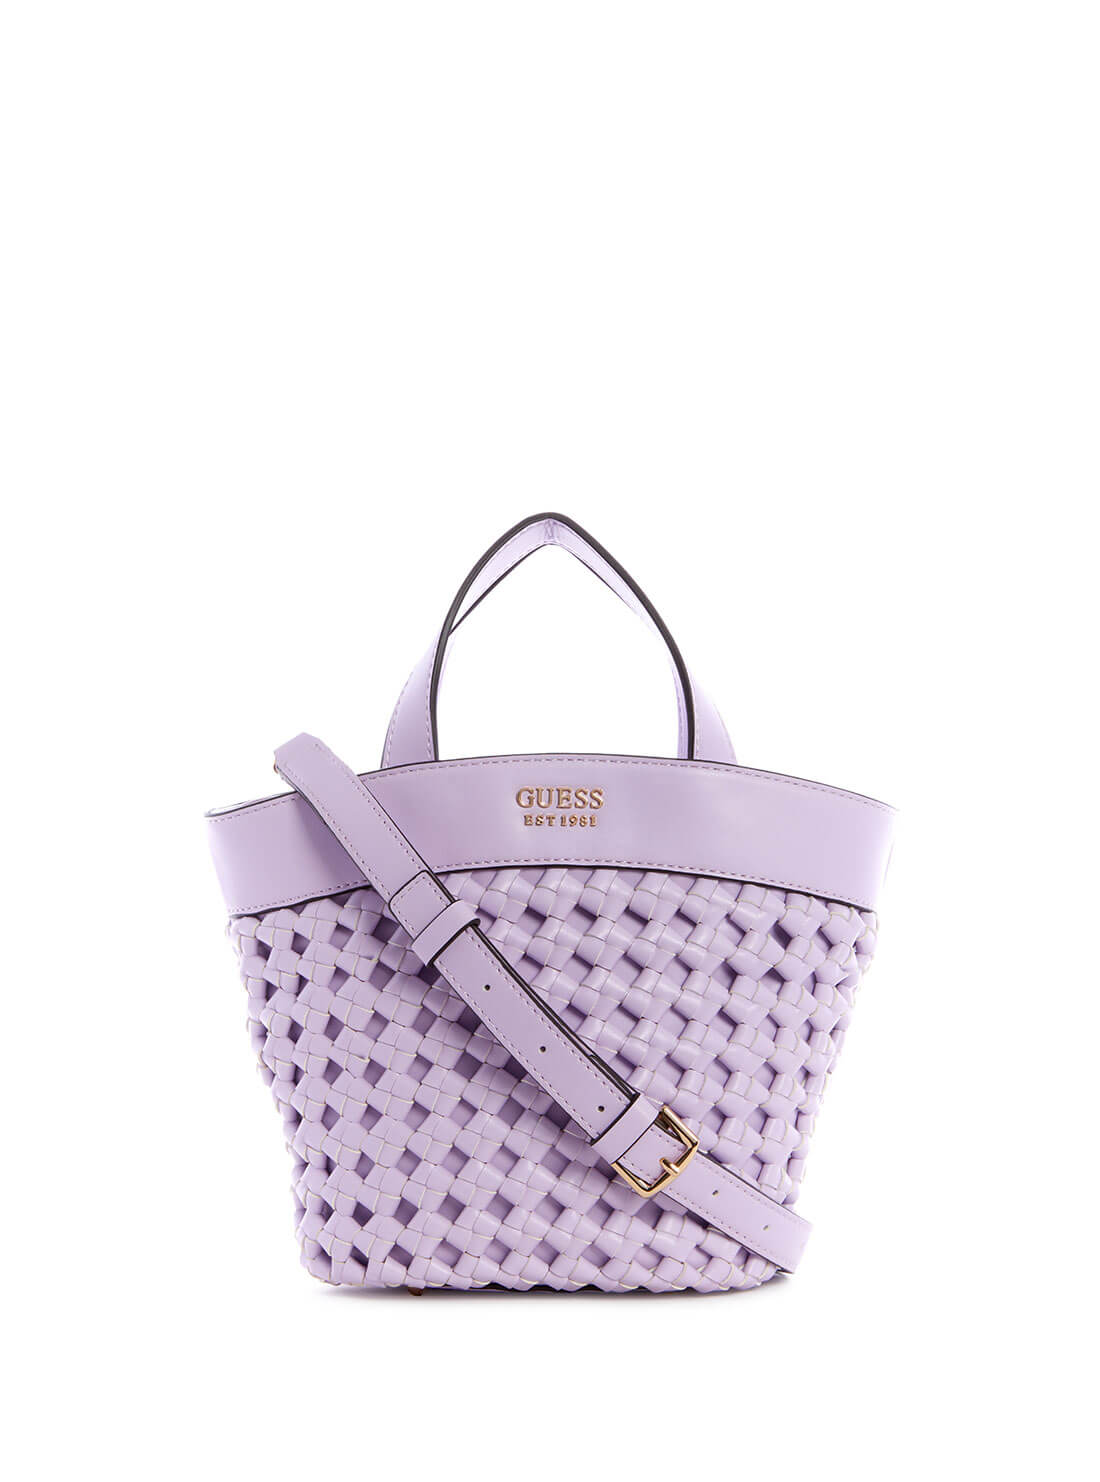 GUESS Womens Lilac Sicilia Mini Tote Bag WG849075 Front View